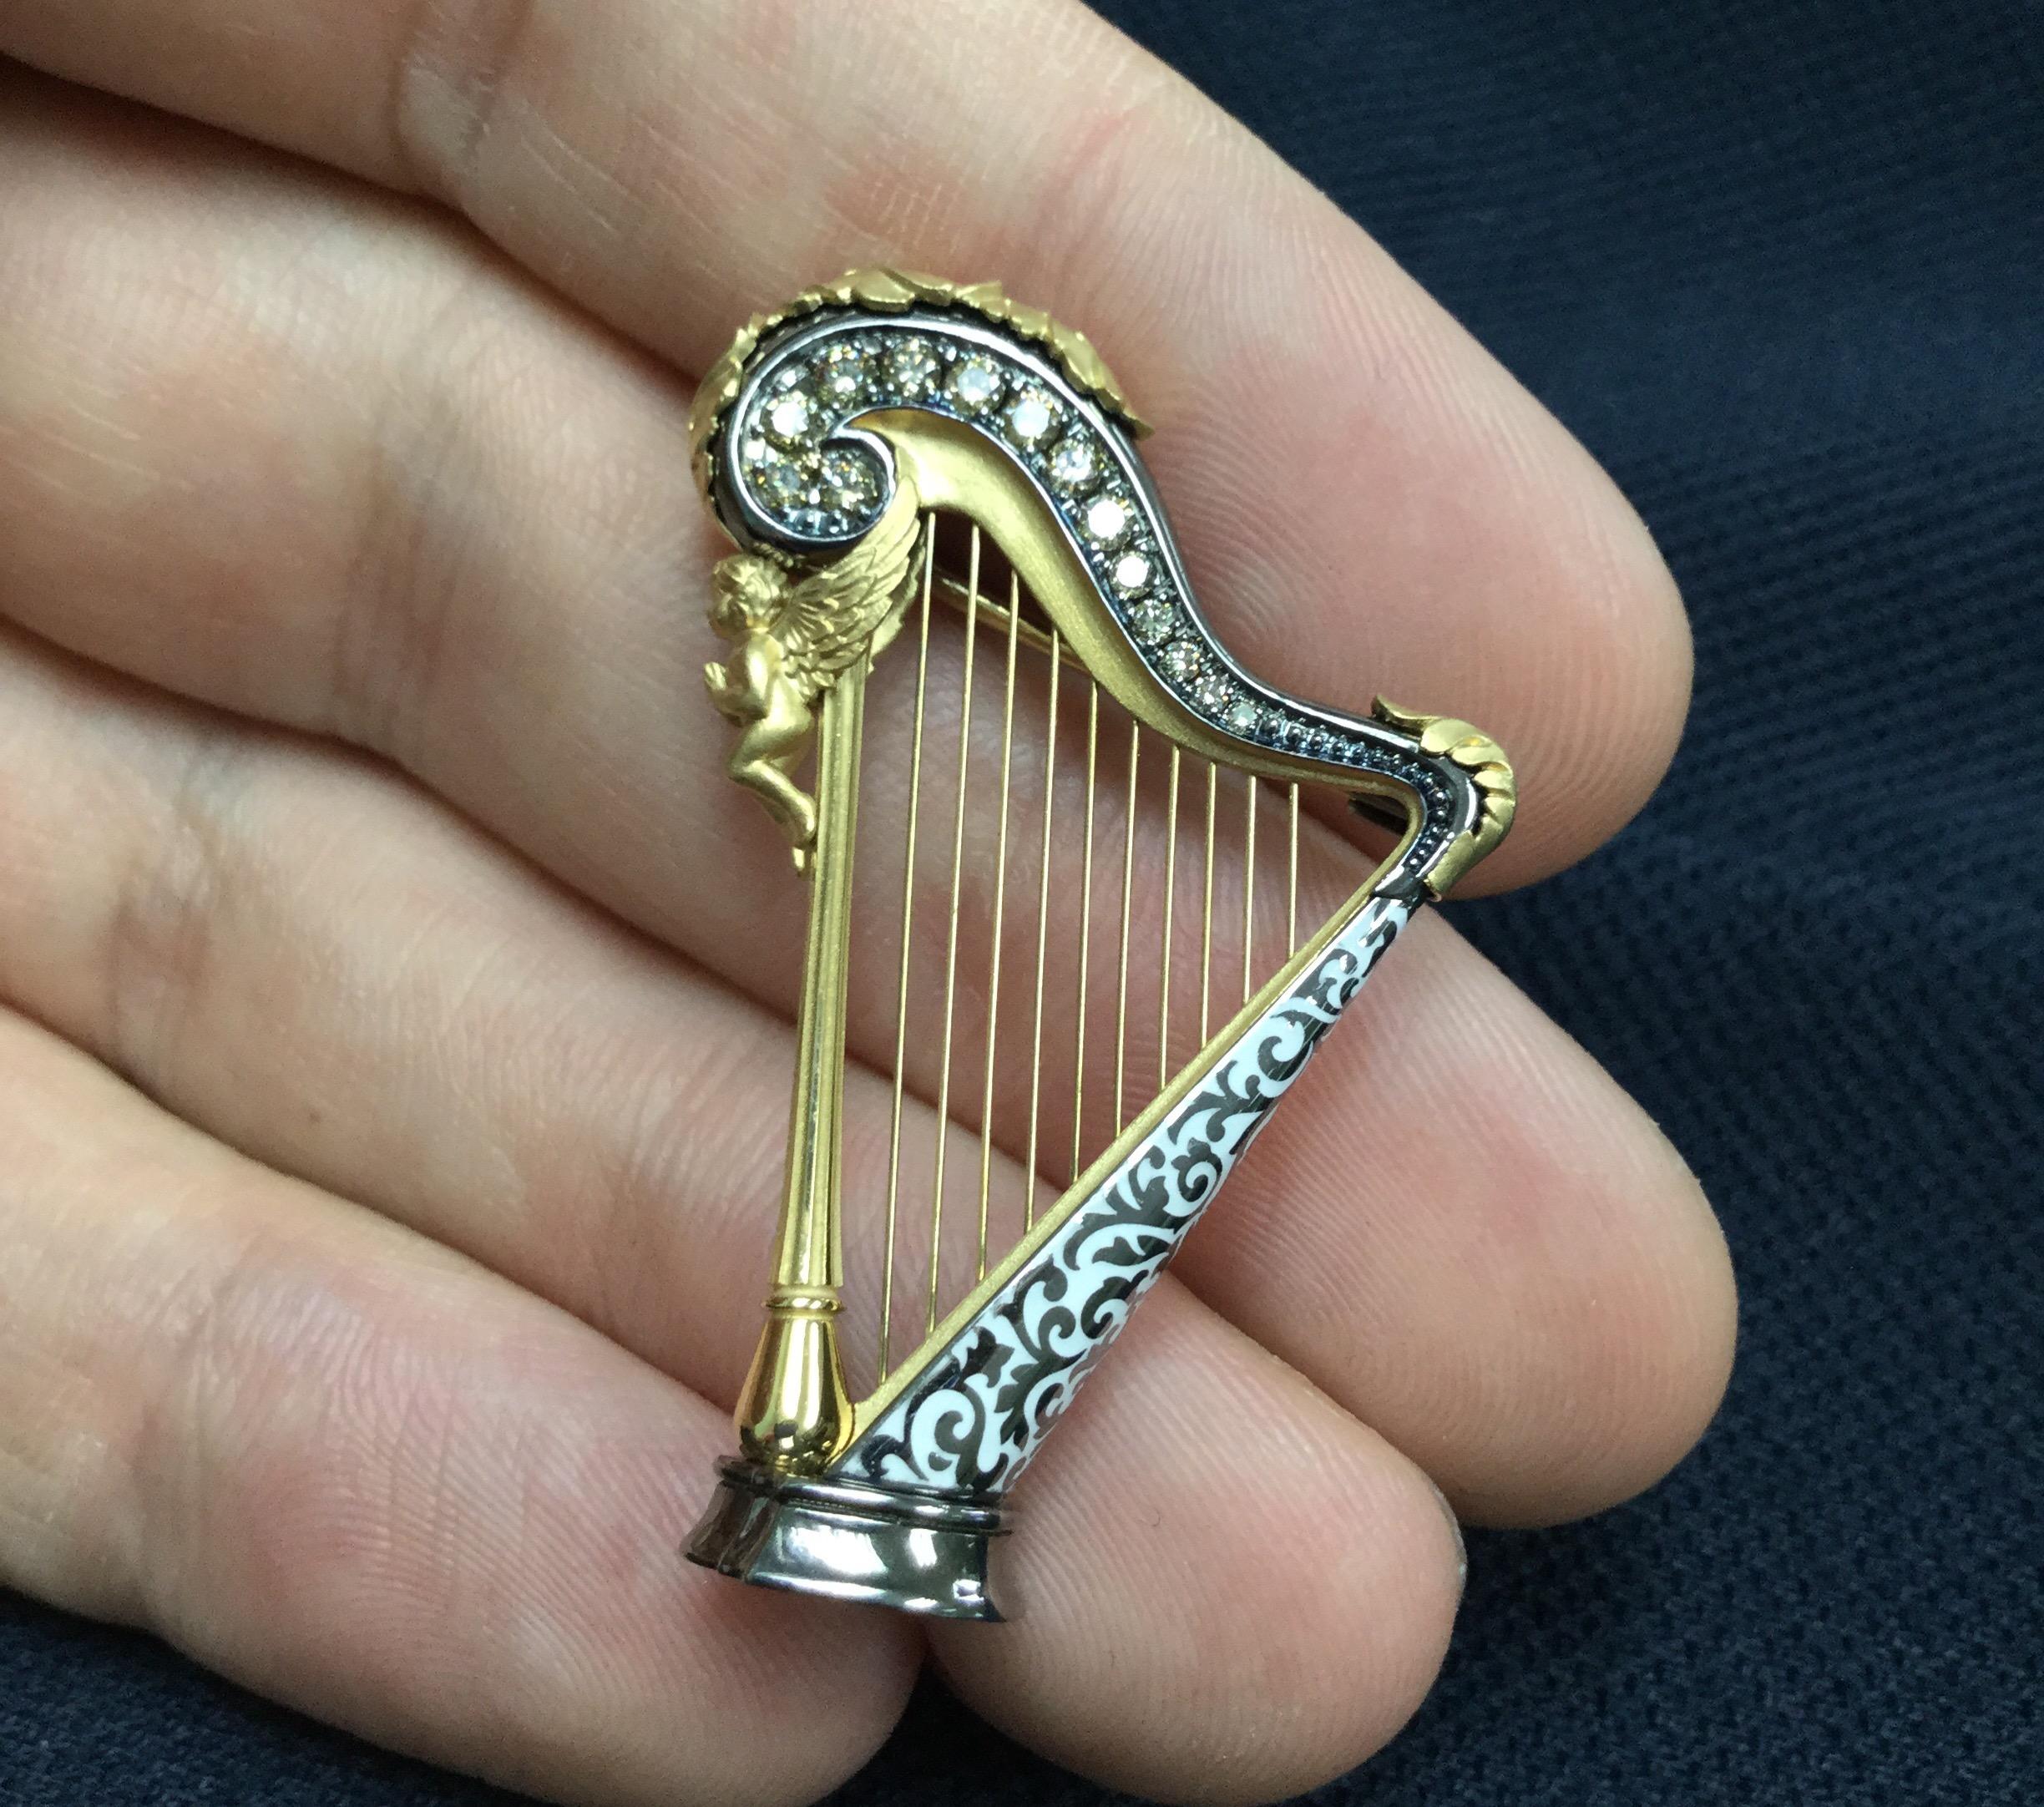 gold harp logo